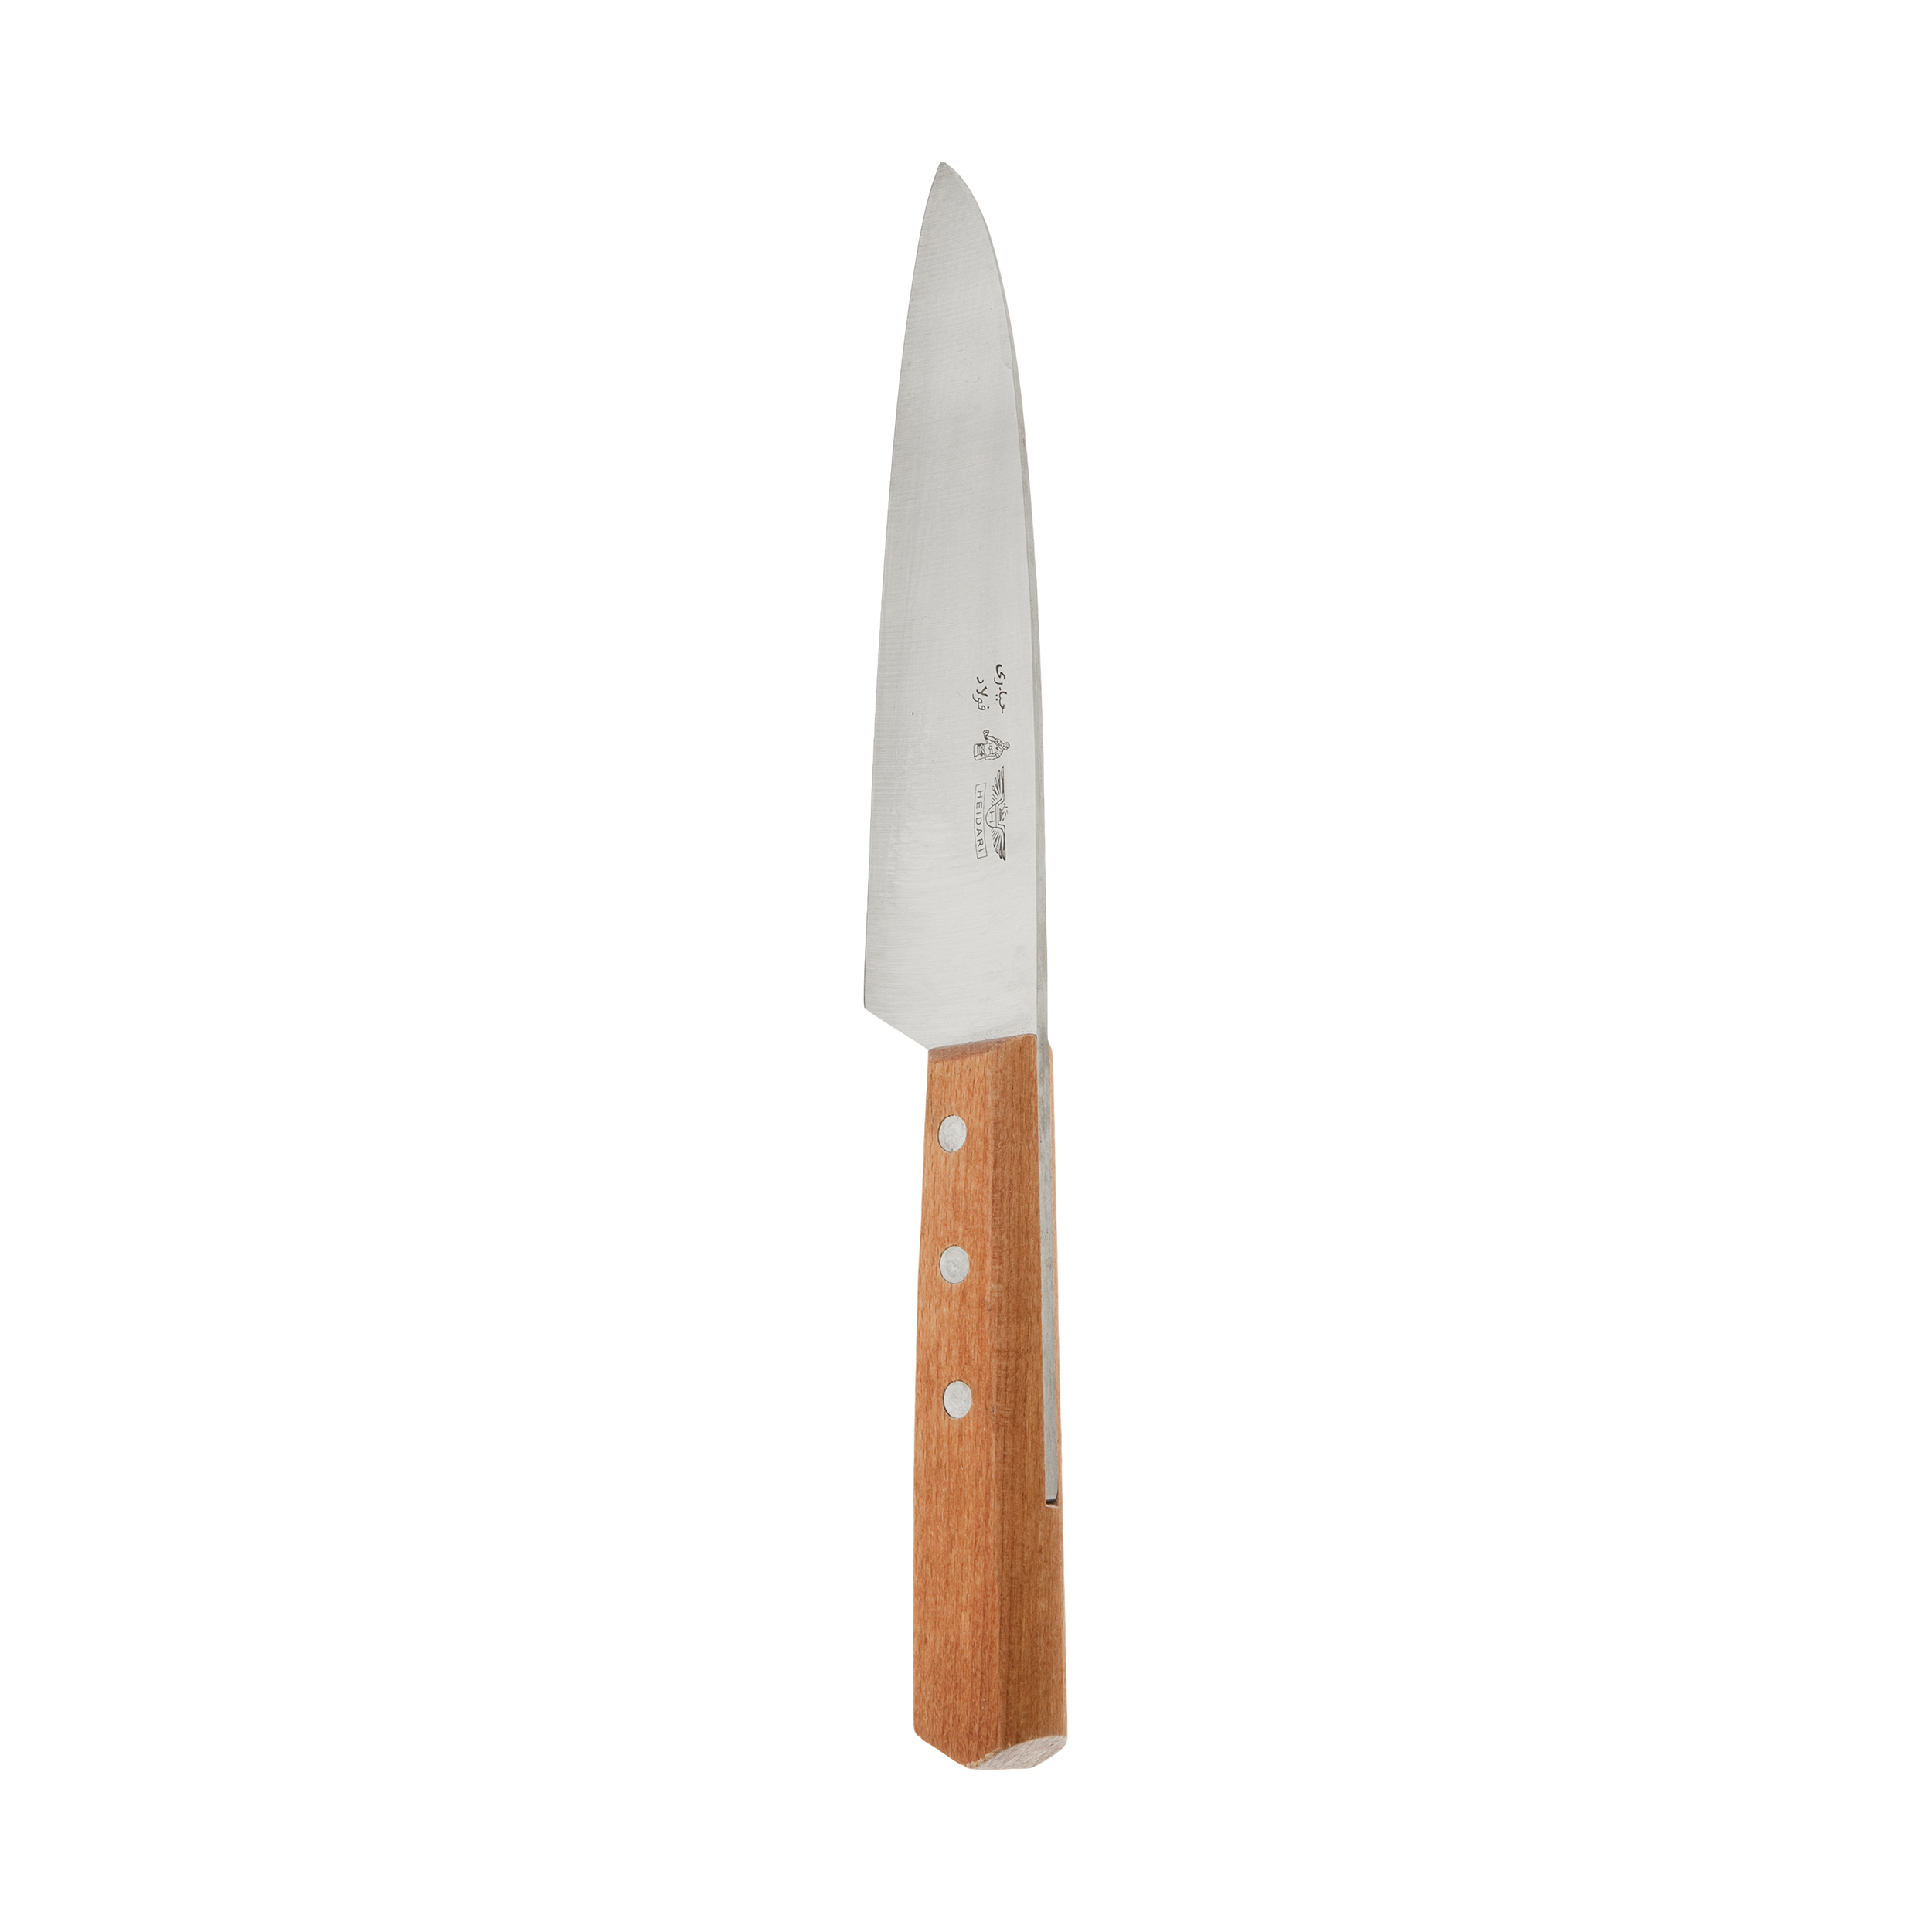 چاقو آشپزخانه حیدری مدل BET-RST 3